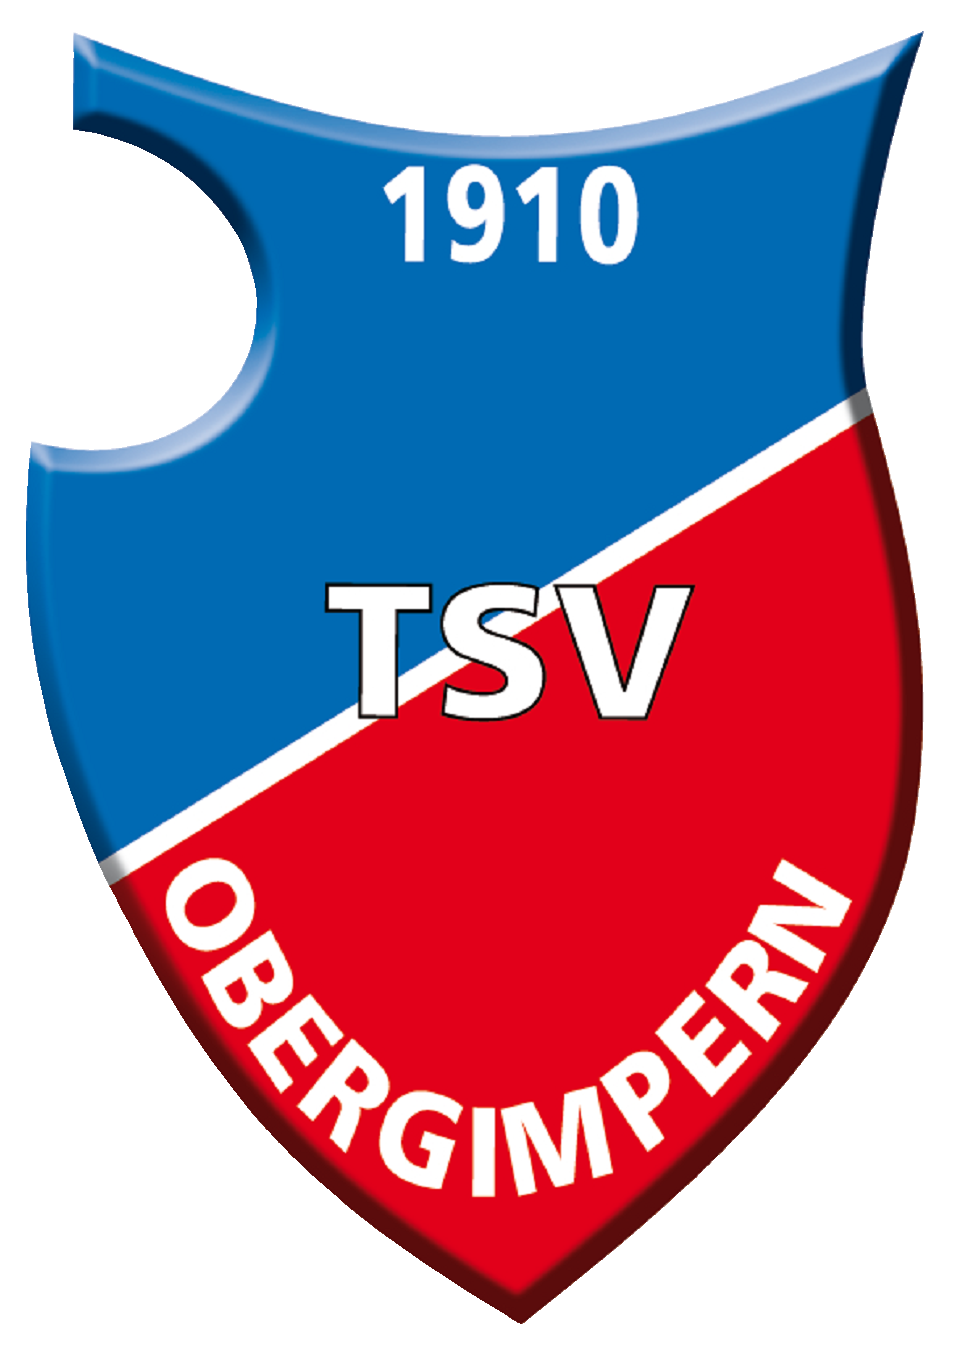 TSV Obergimpern Logo